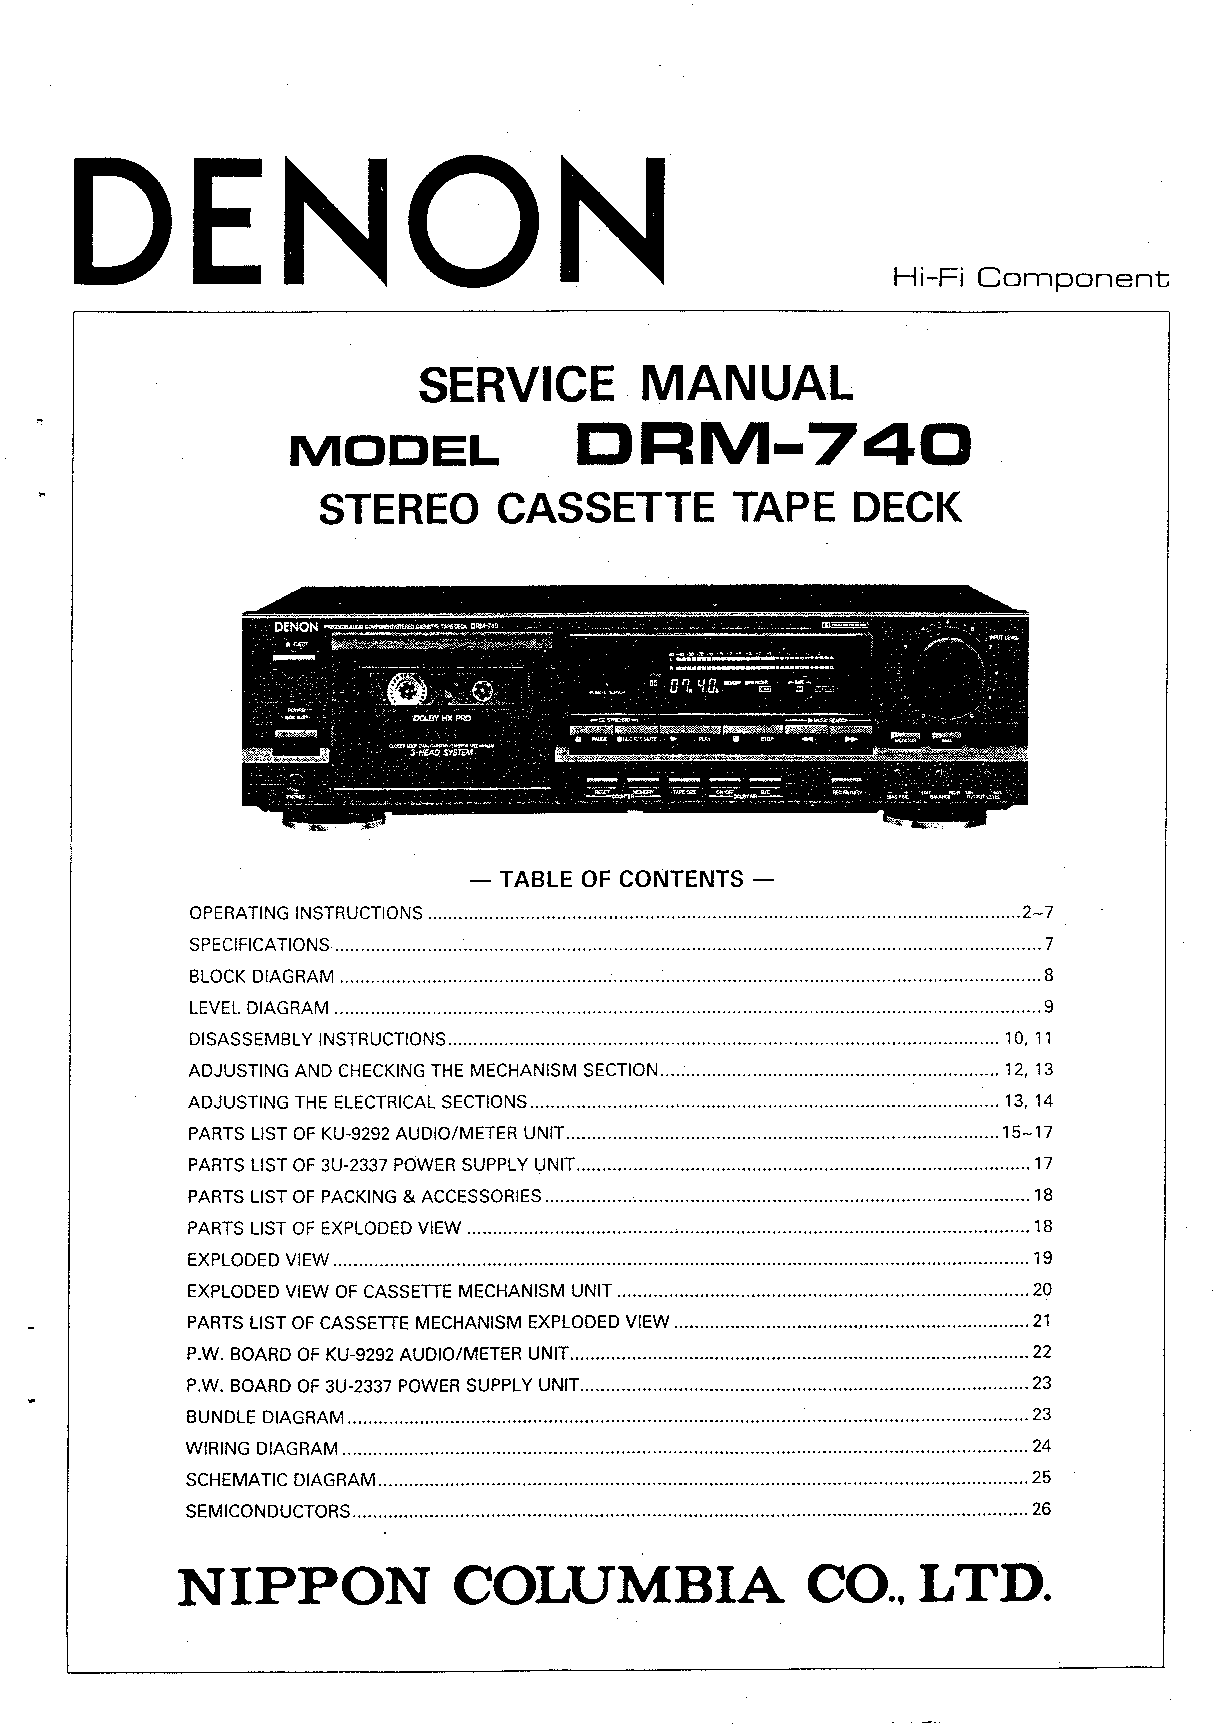 Denon DRM-740 Service Manual